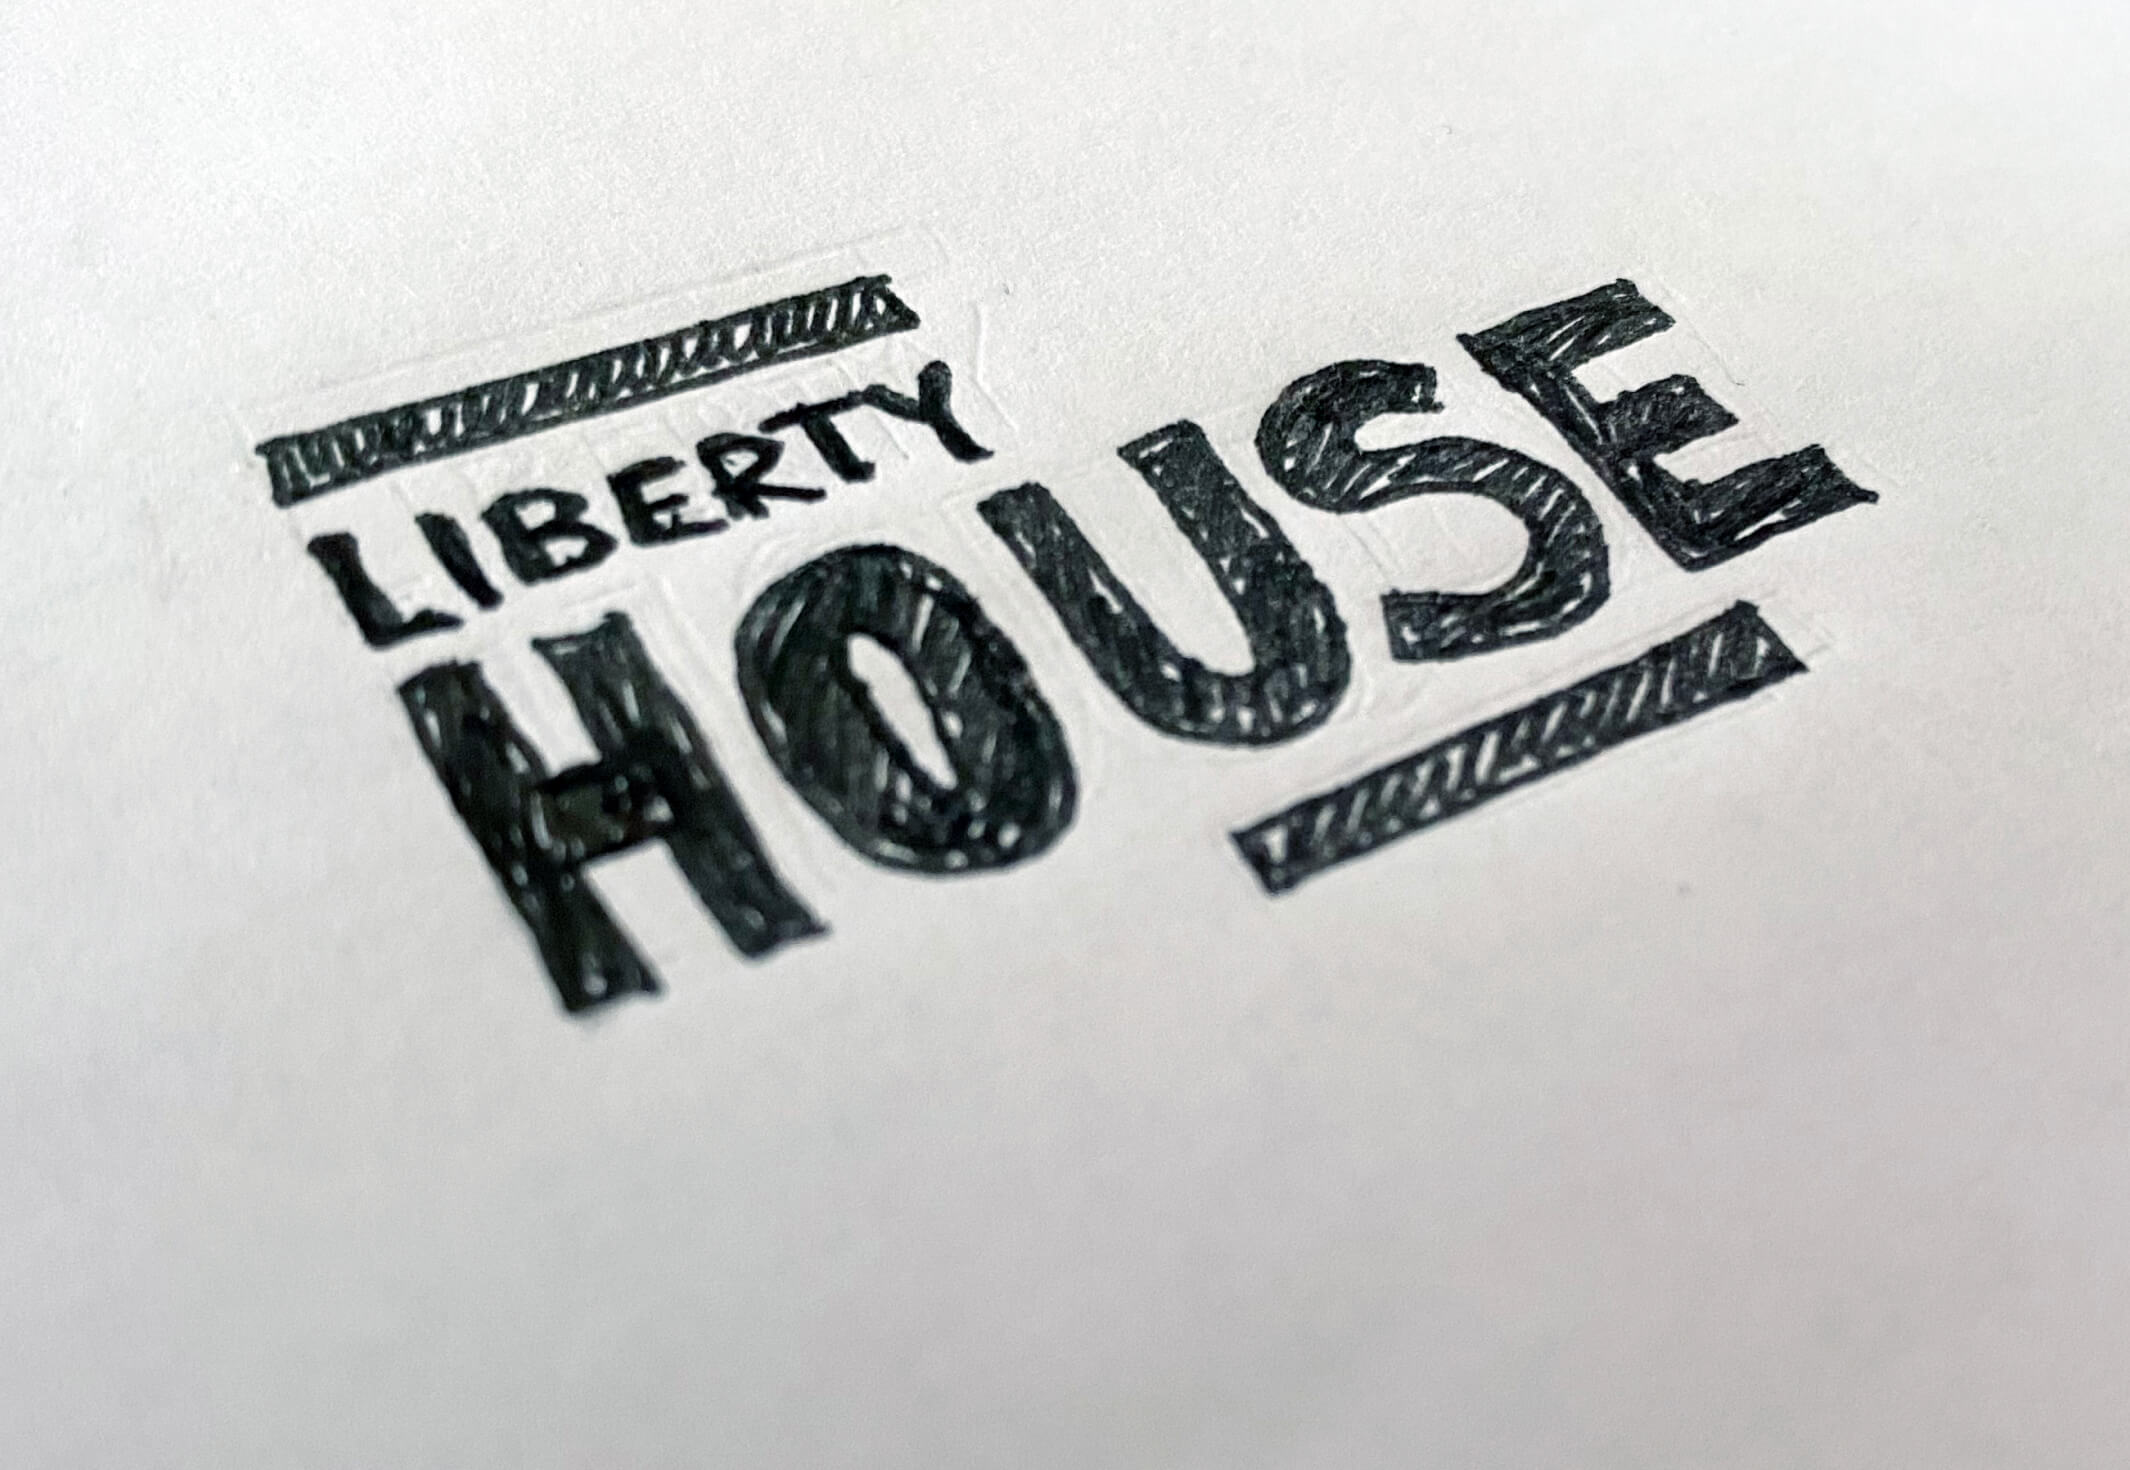 A preliminary sketch for the Liberty House logo